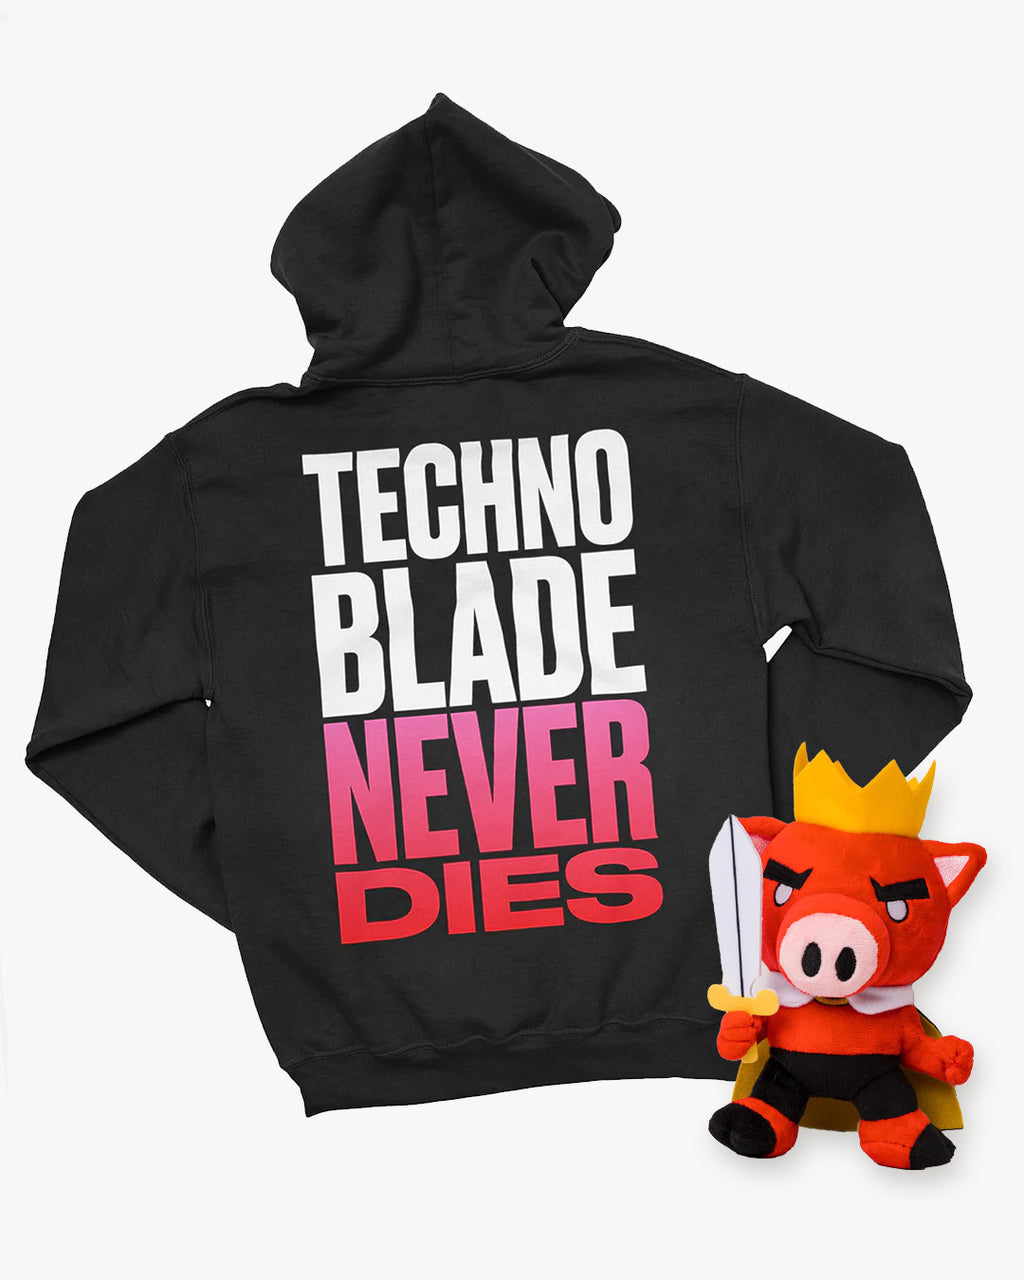 Technoblade never dies baby! : r/Technoblade